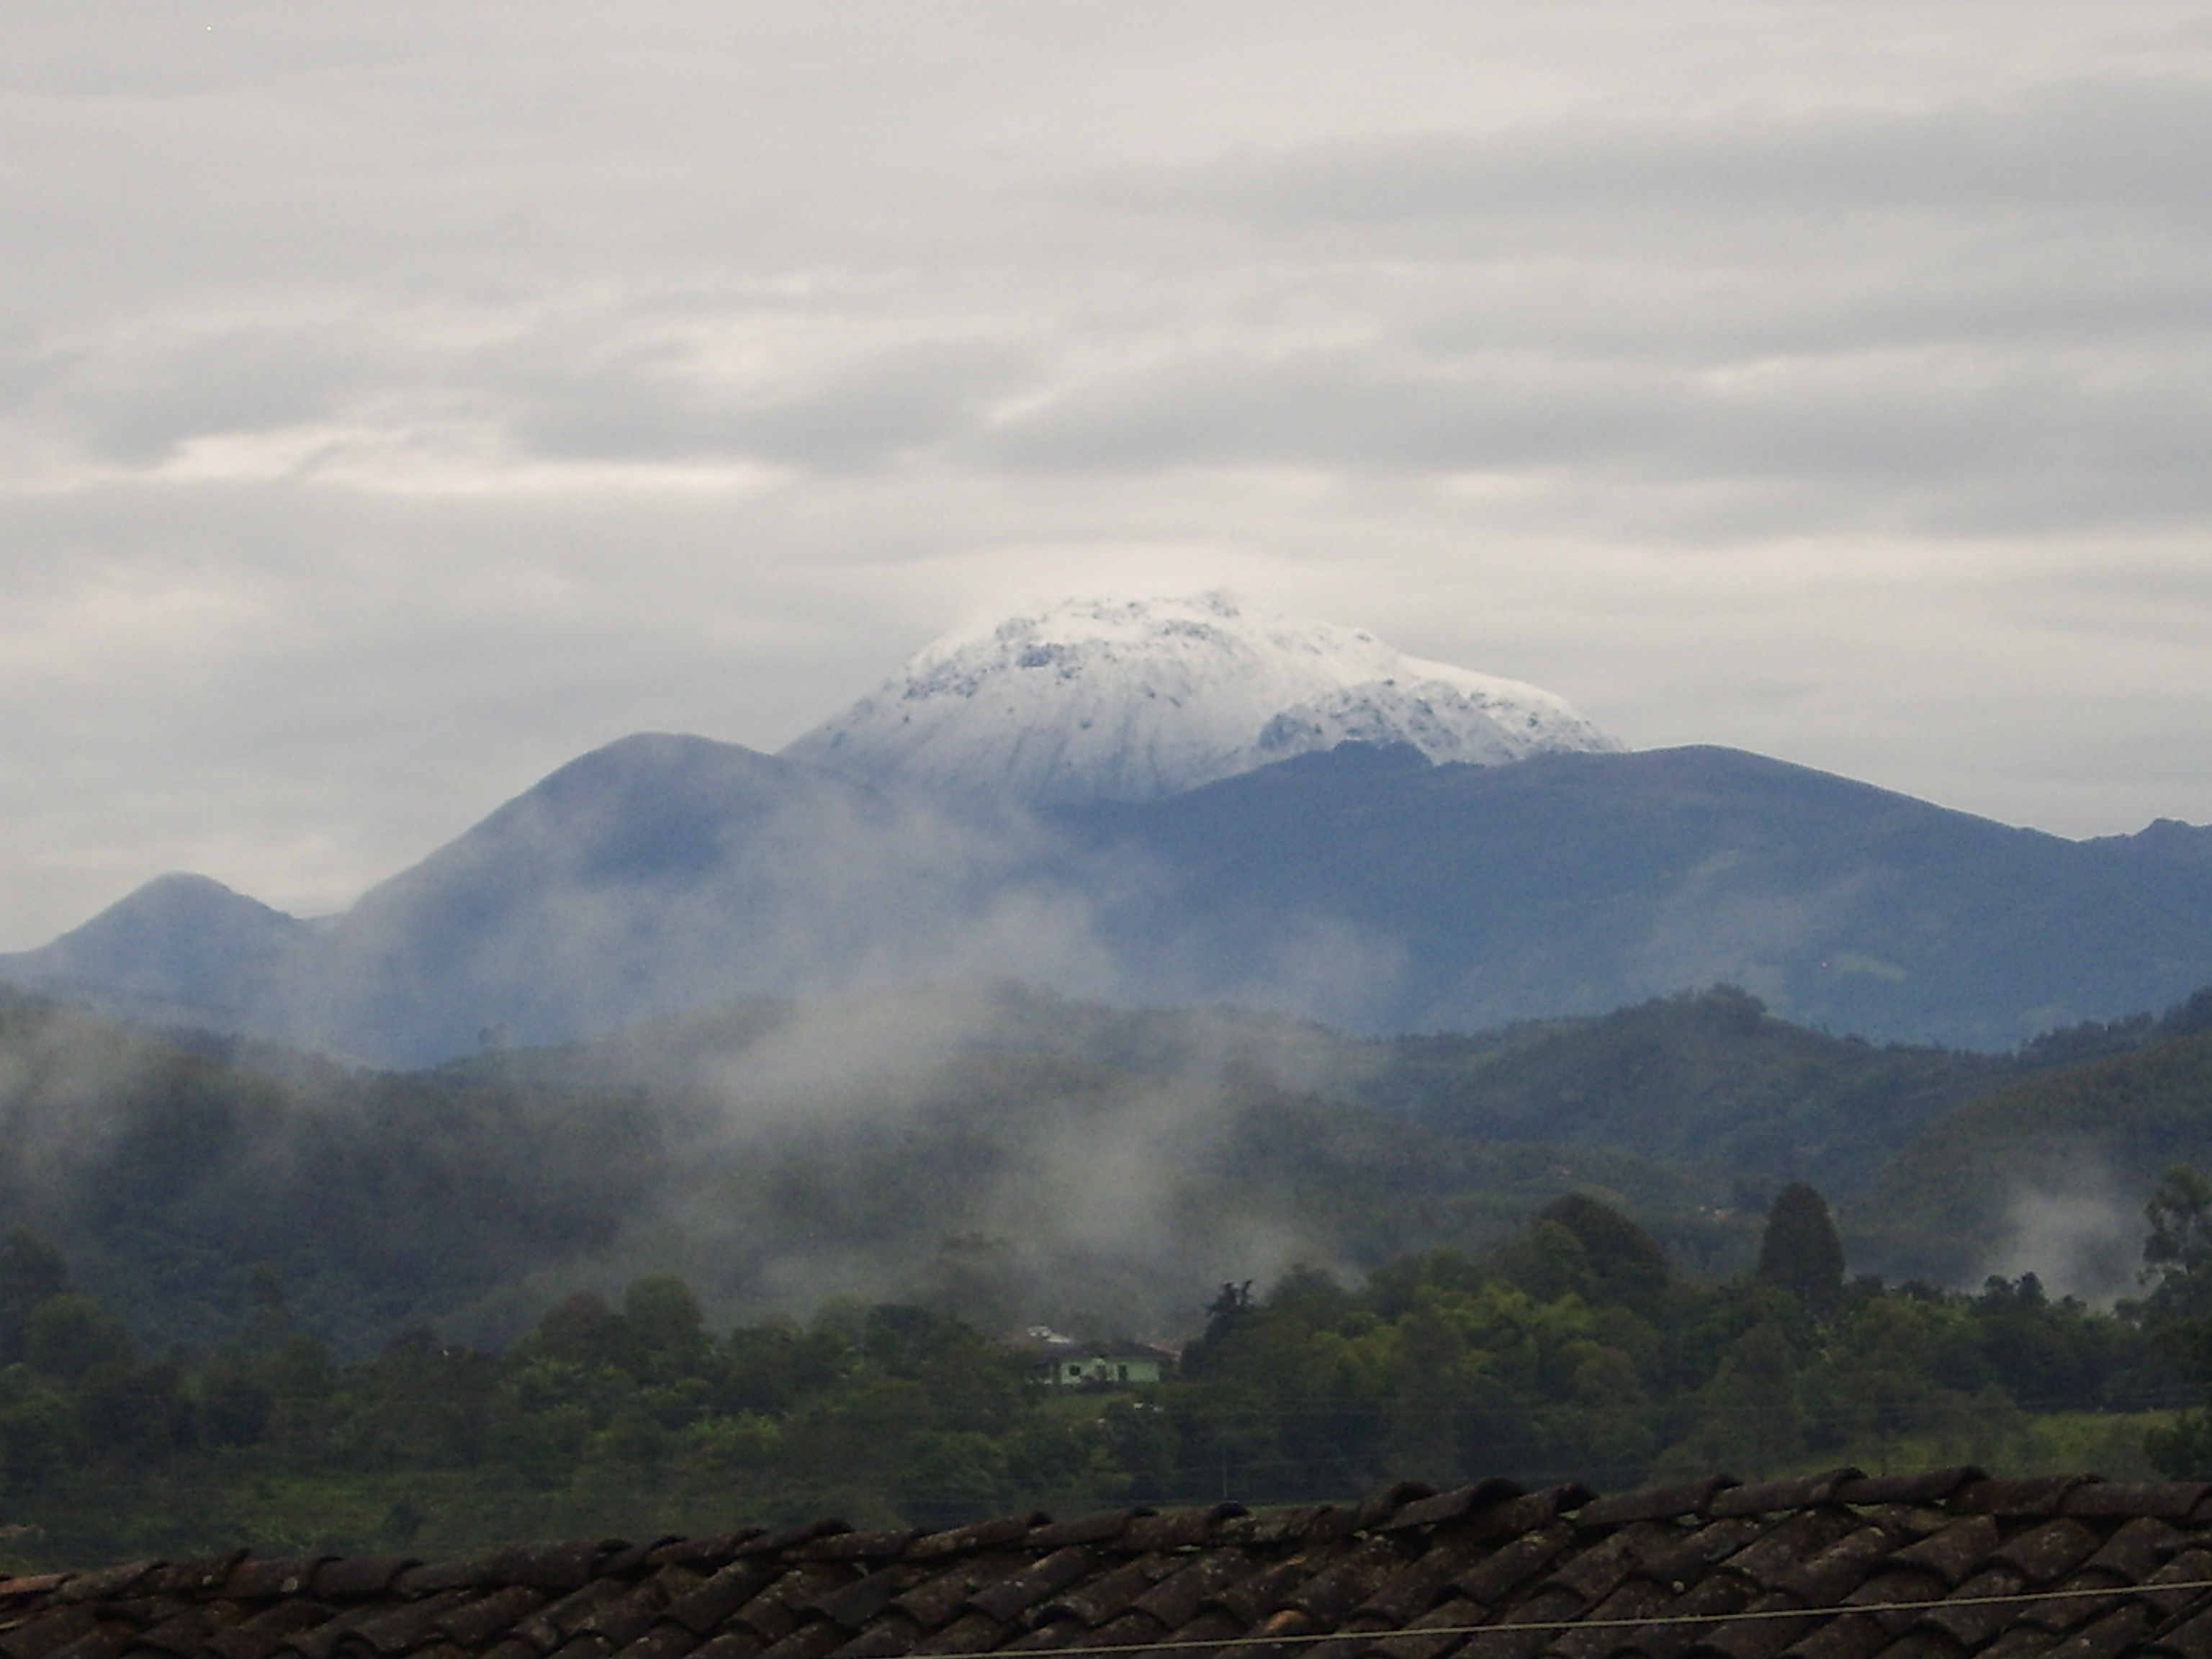 sotara-volcano-colombia-orange-alert-level-6900-earthquakes-since-june-24th